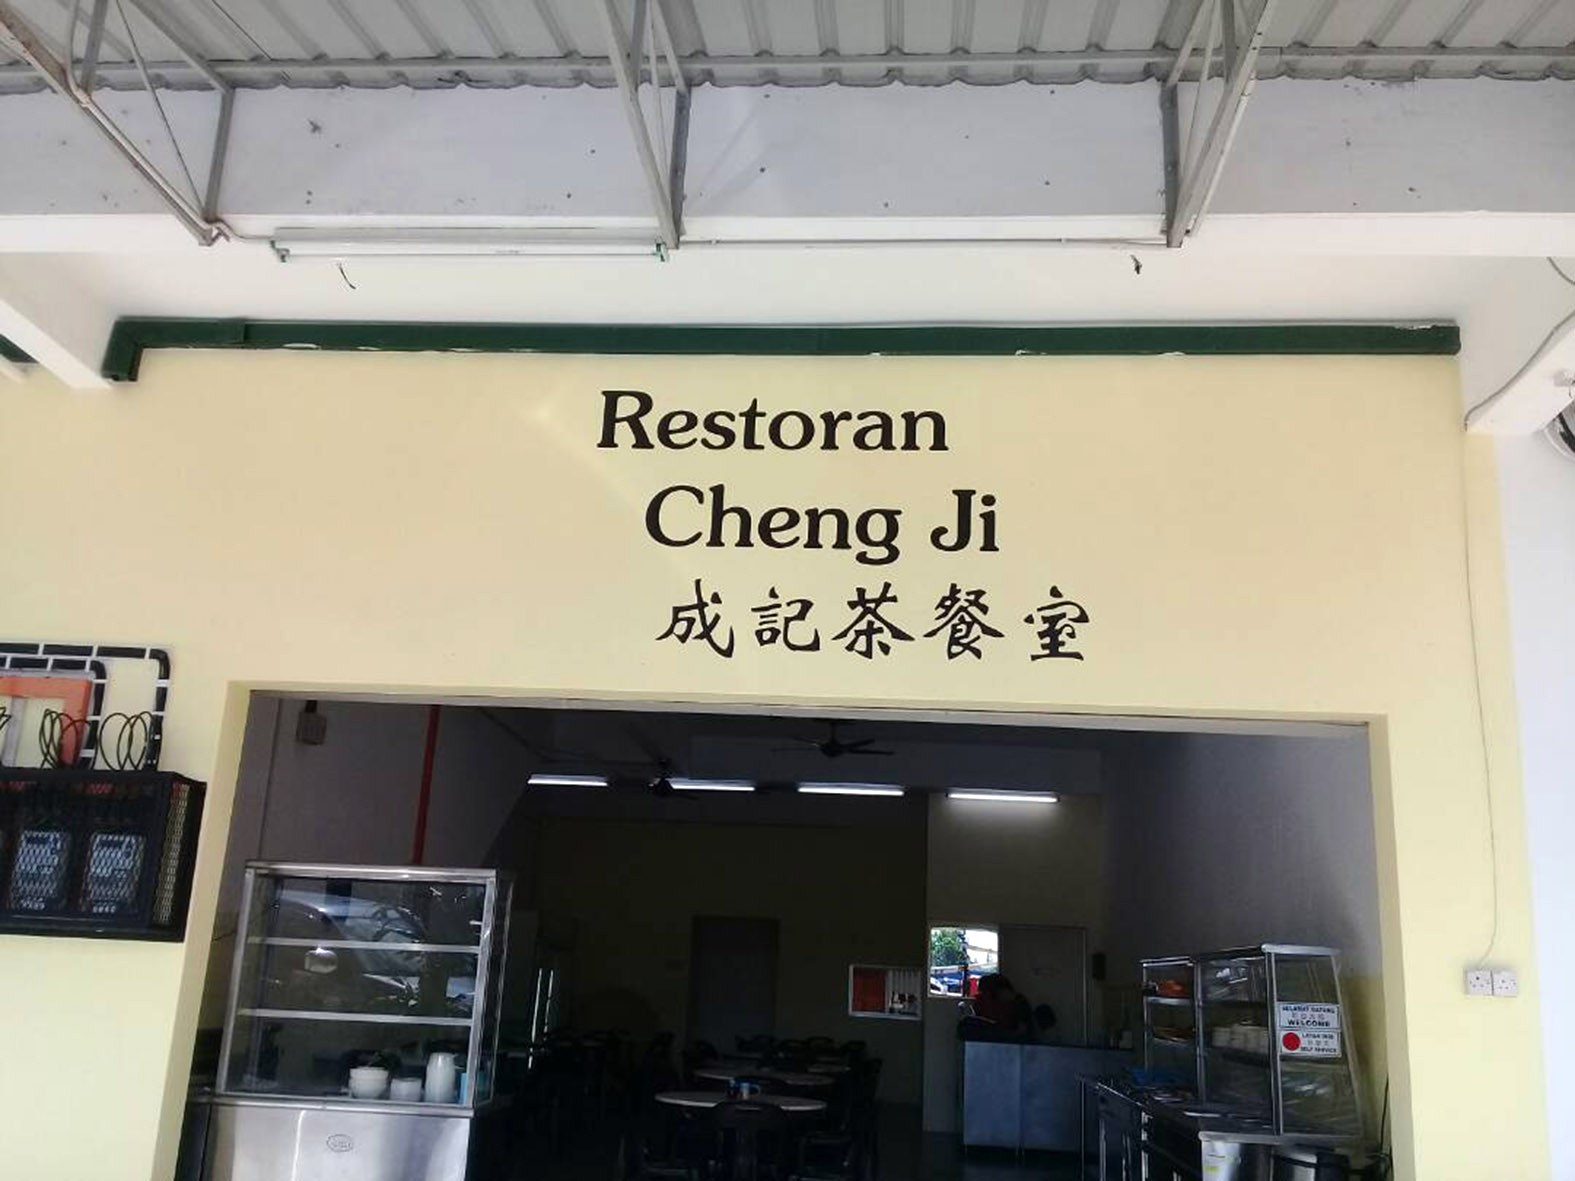 Restoran Cheng Ji